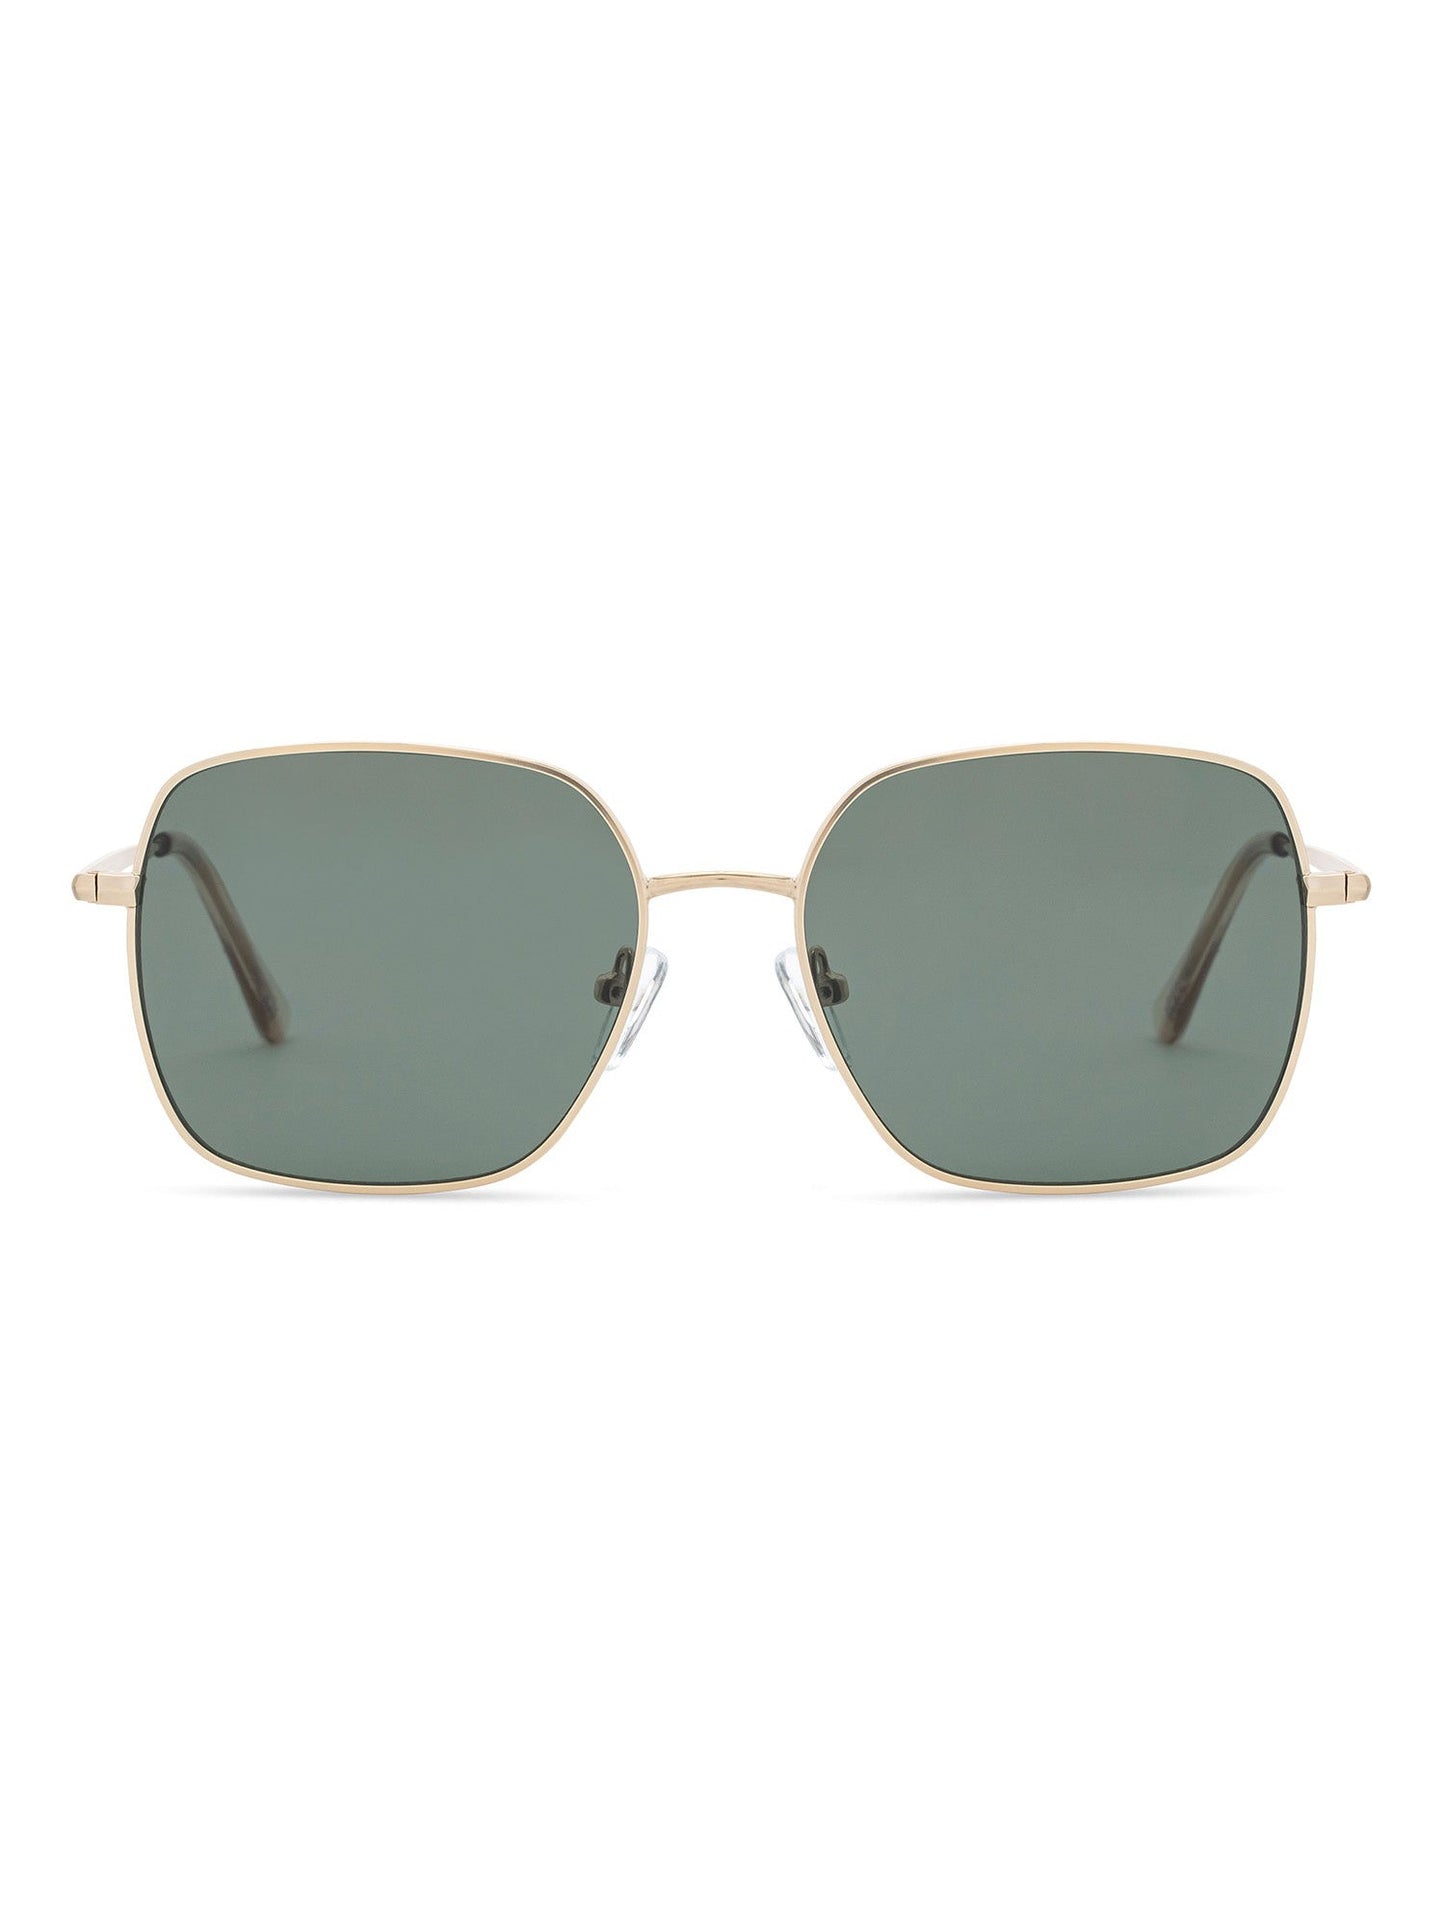 DREW Premium Sunglasses with "SHADES" Signature Font - Rae Dunn Wear - Sunglasses